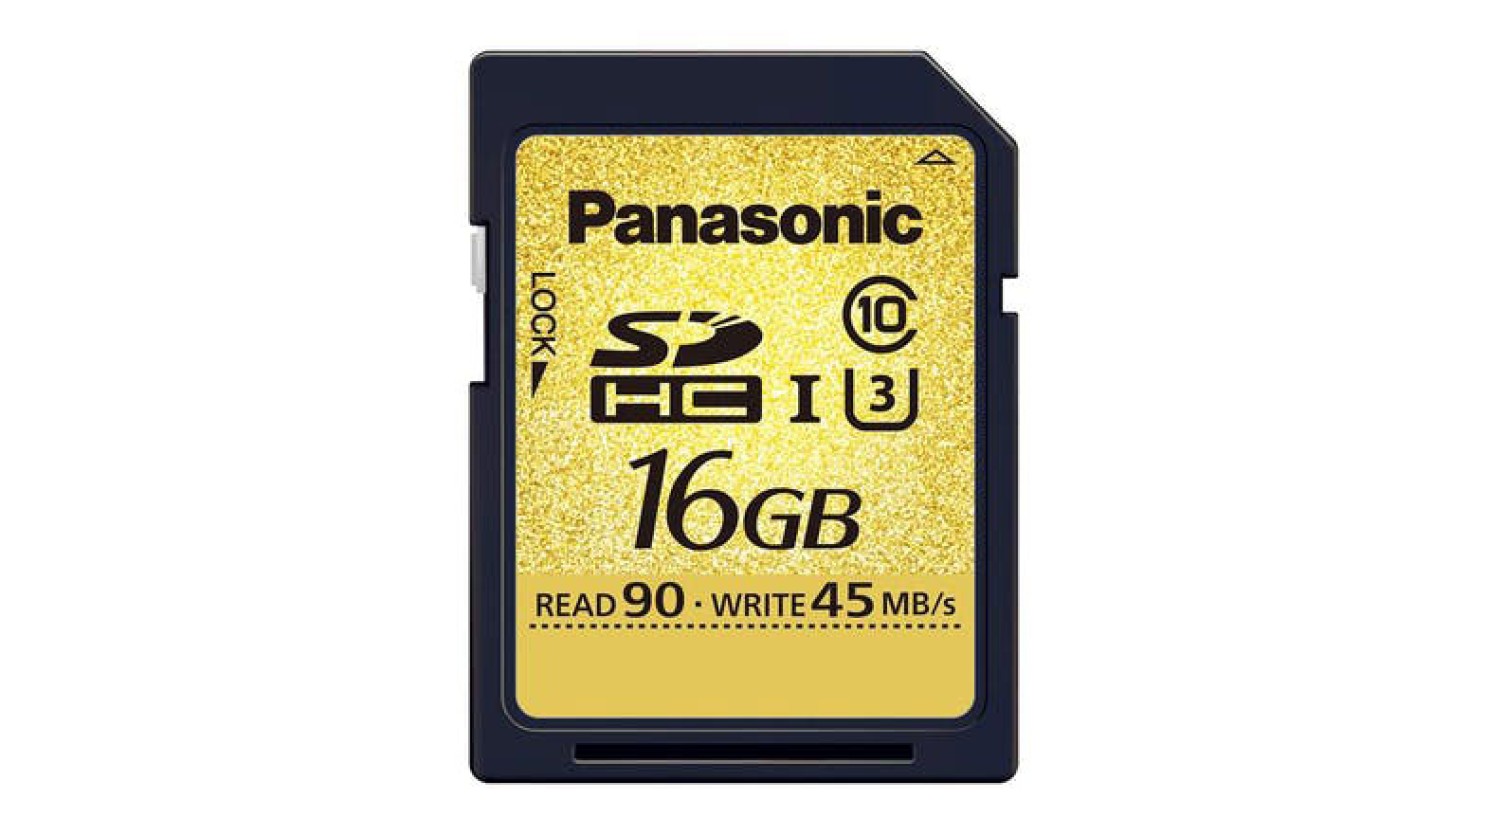 Panasonic 16GB SDXC UHS-I card